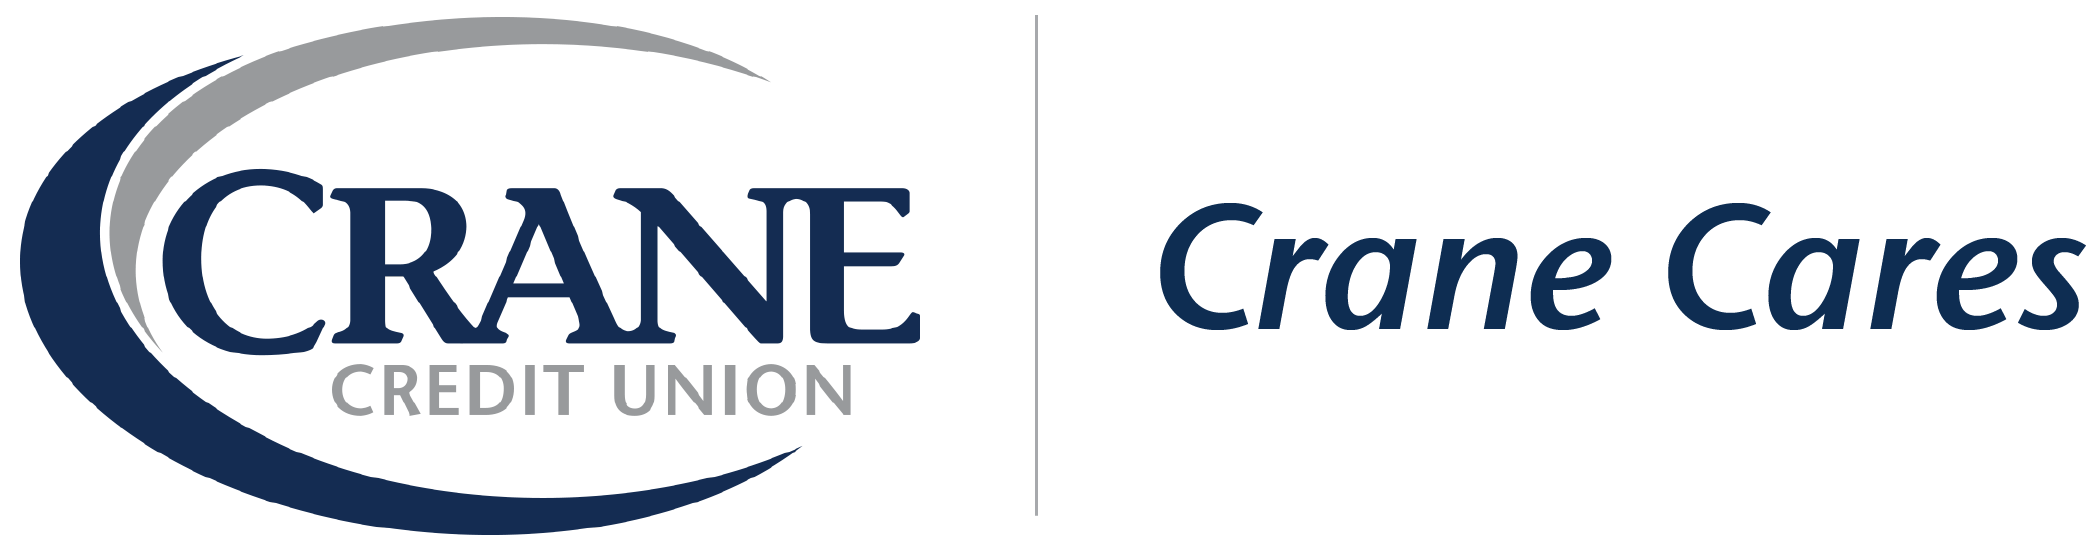 Crane Credit Union logo